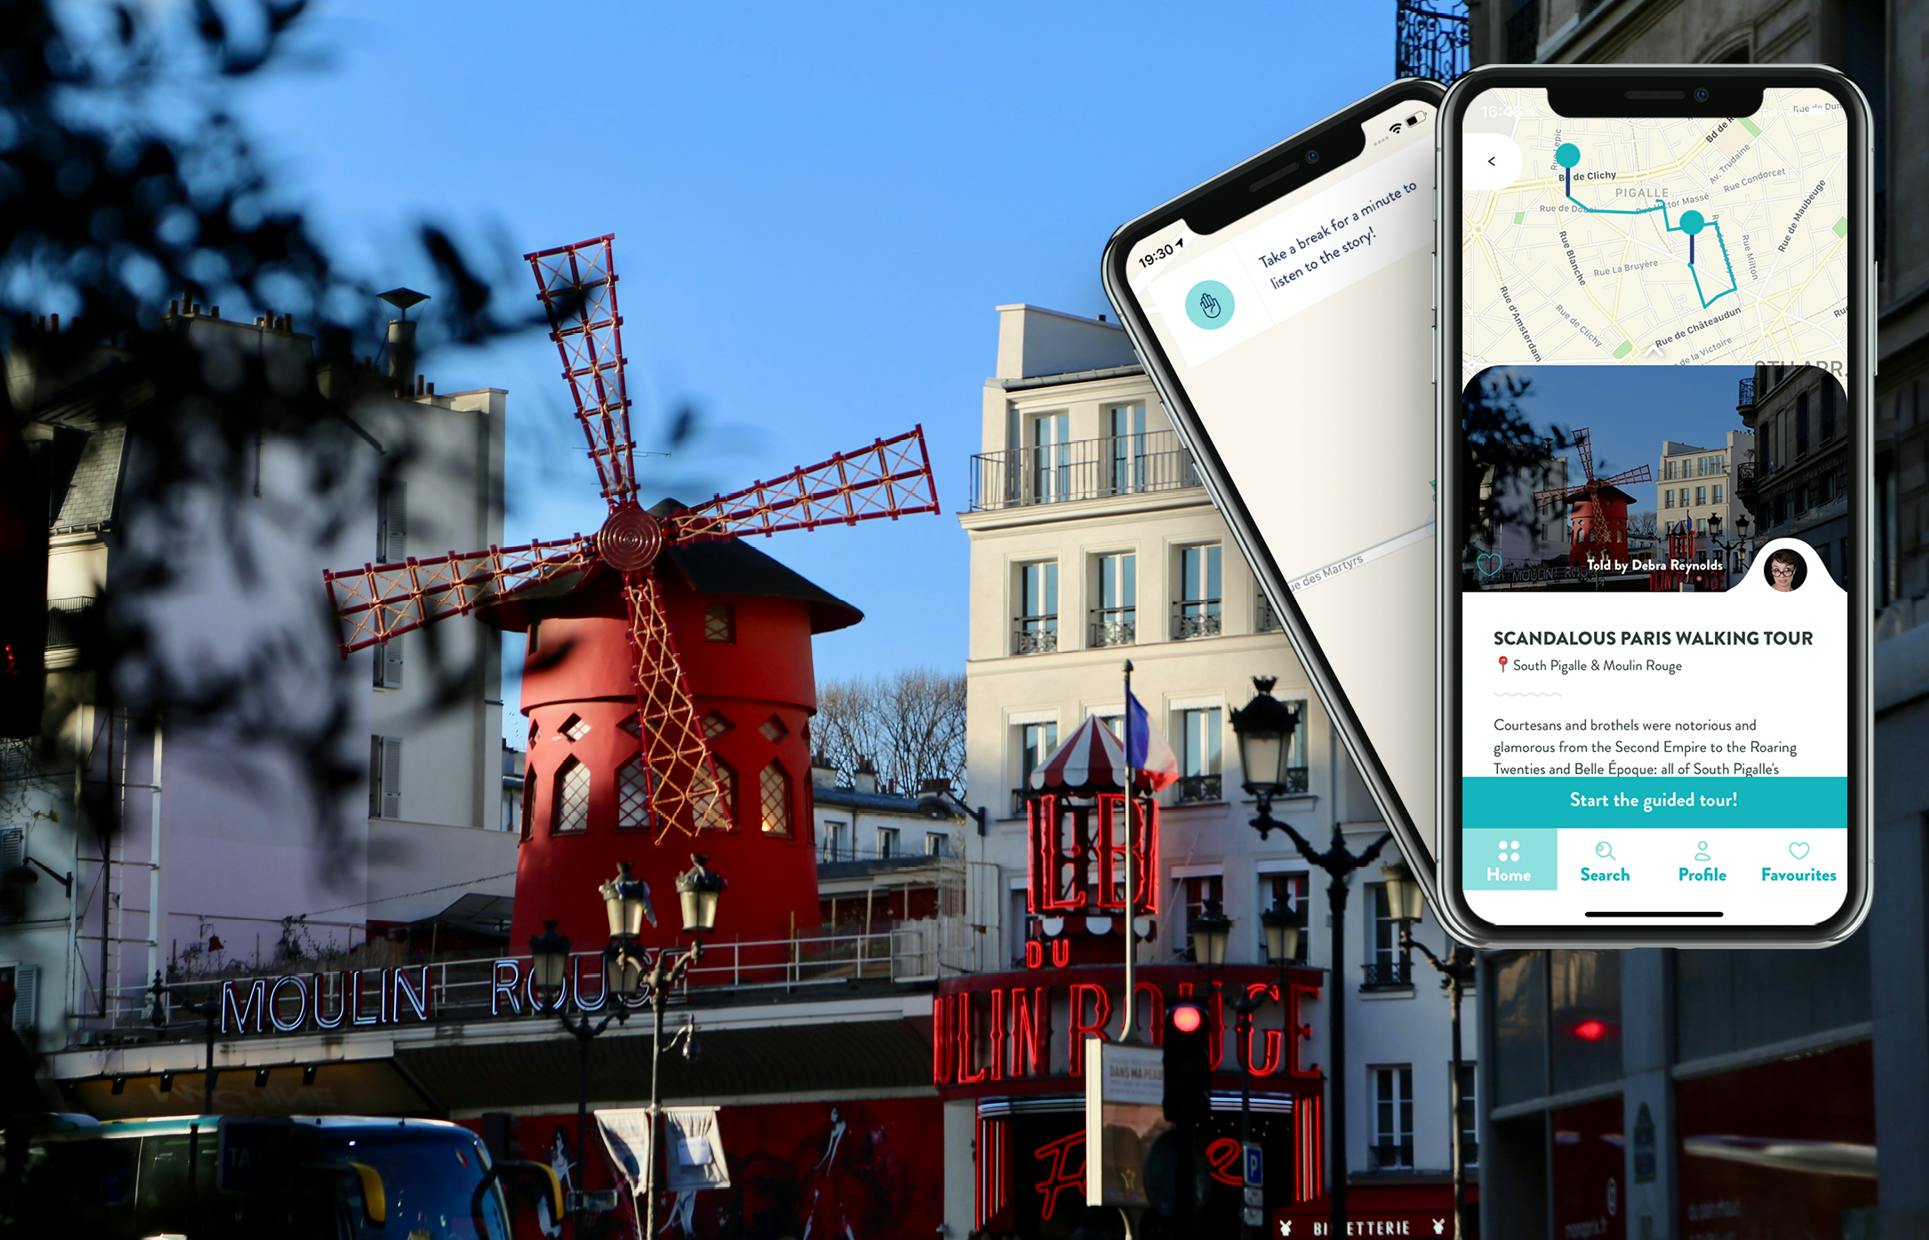 Scandalous Paris tour with guide on your smartphone Musement